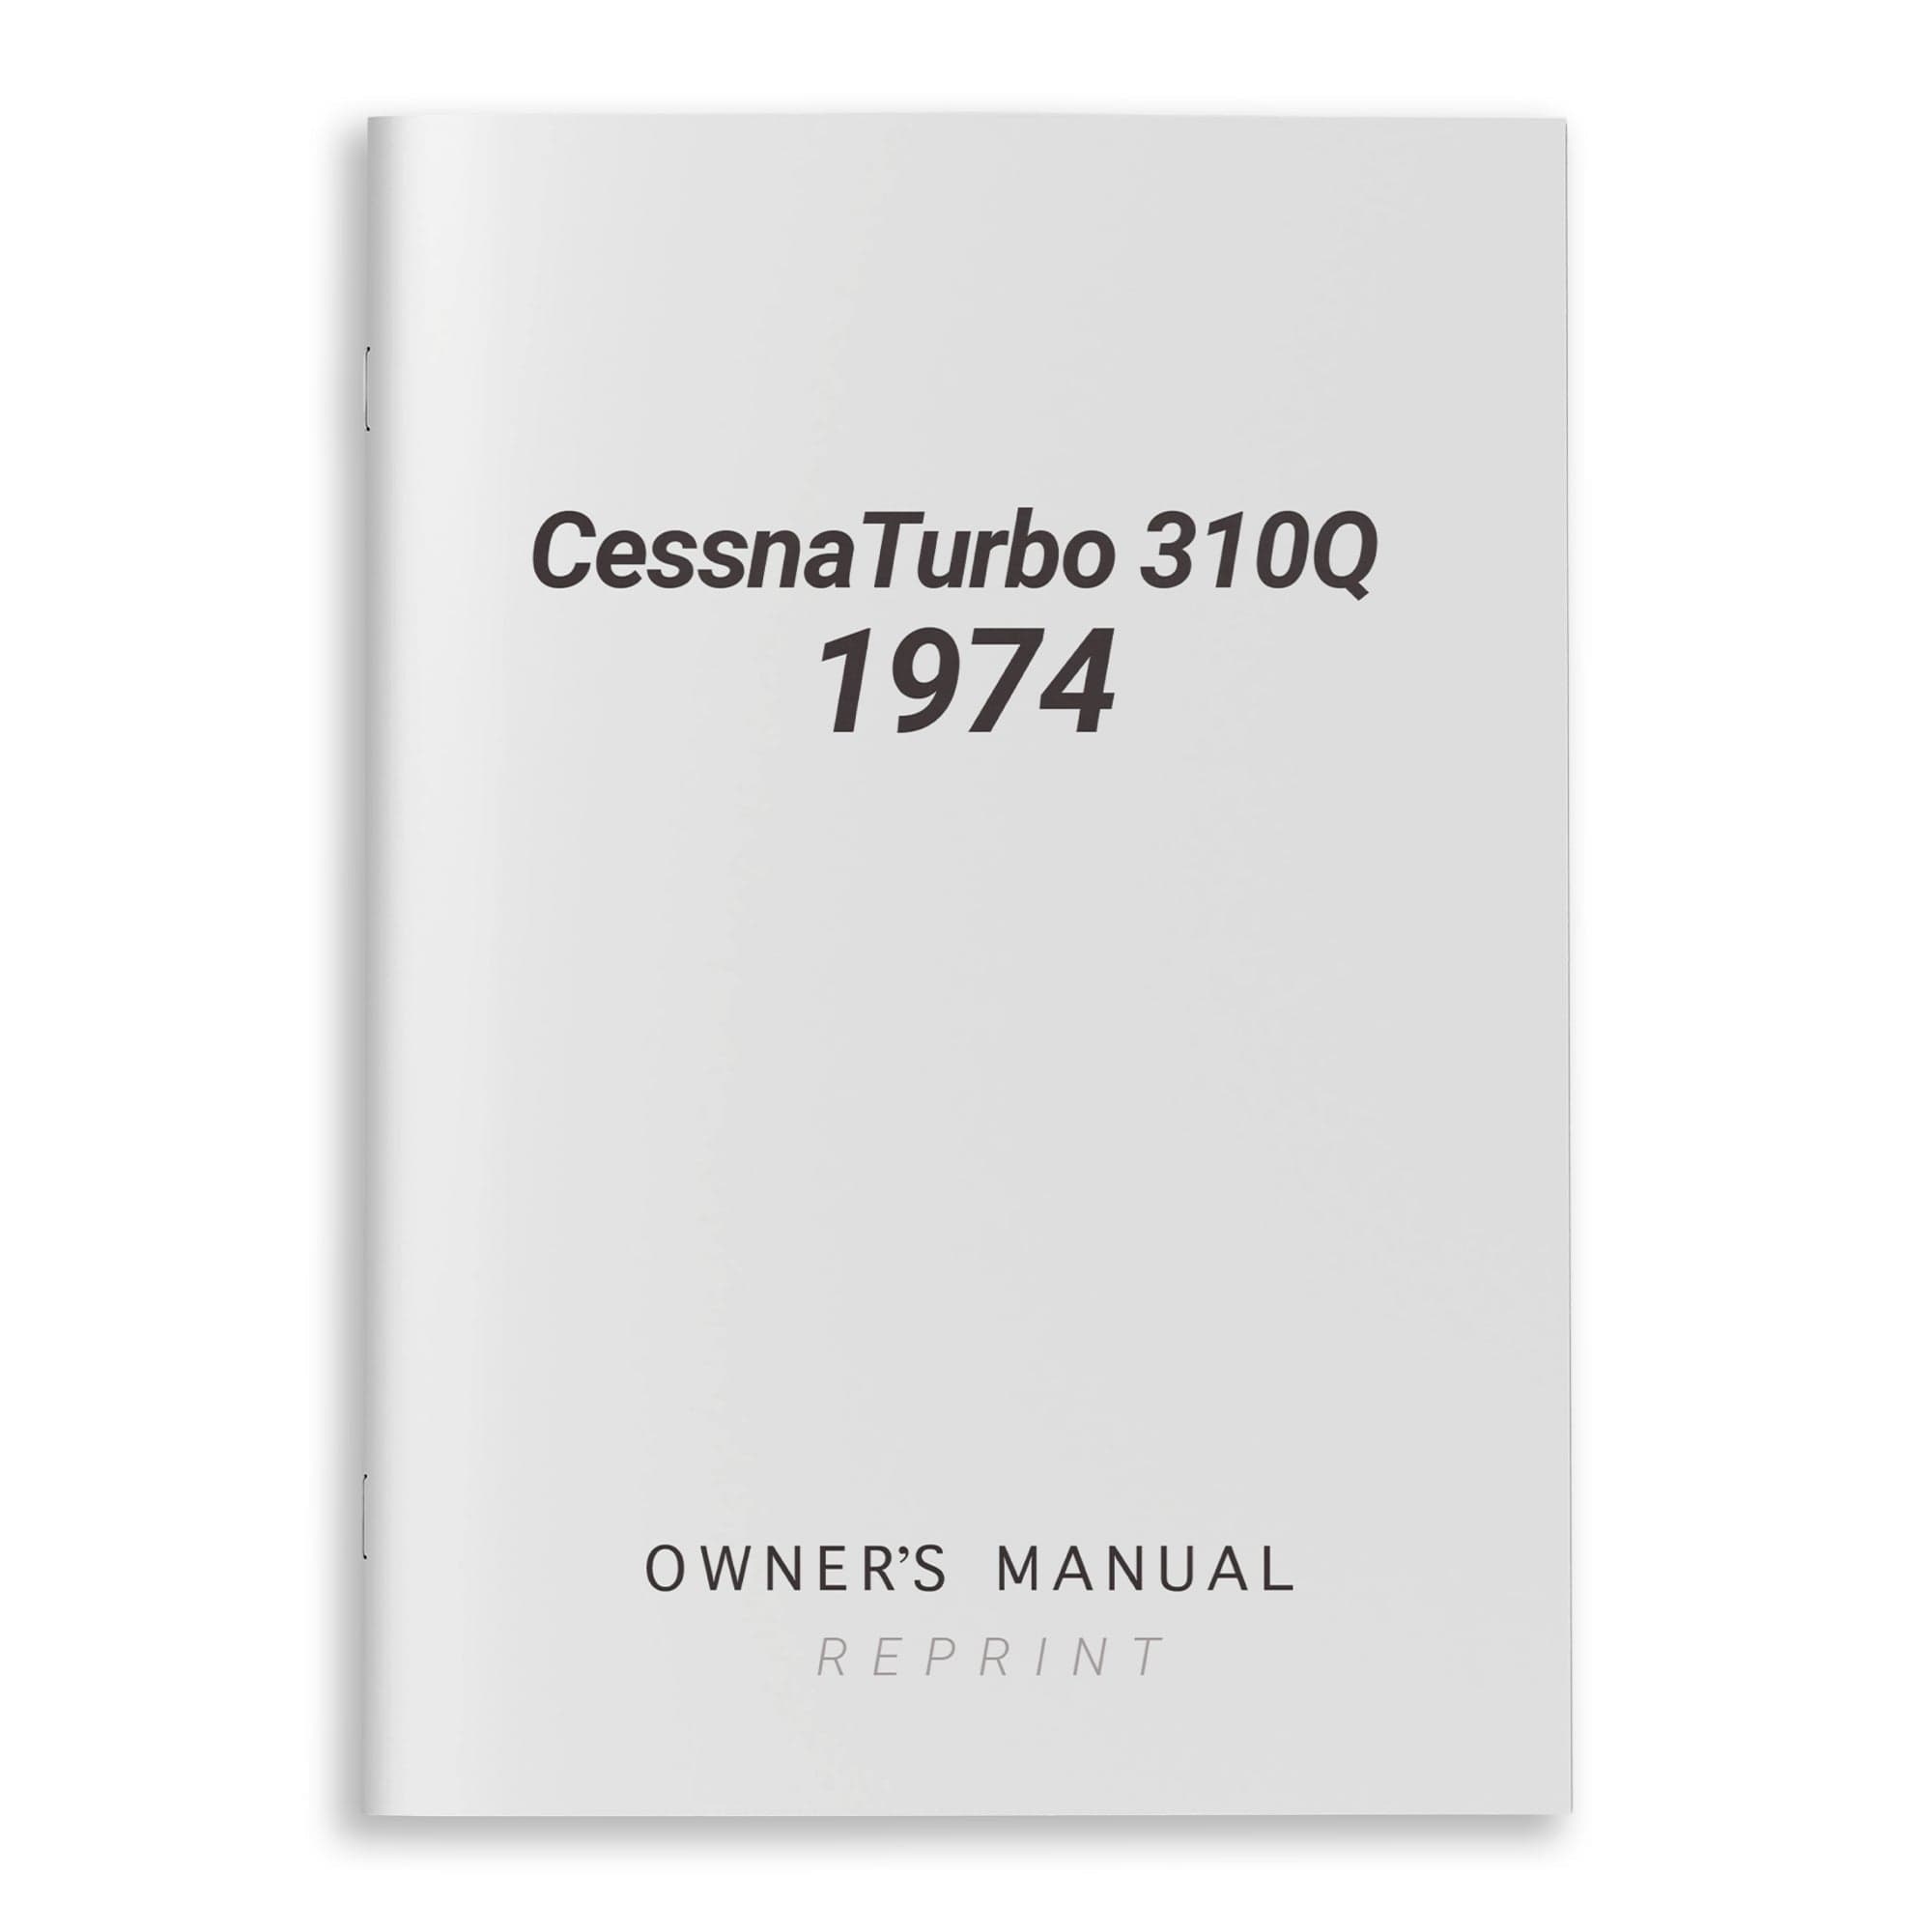 Cessna Turbo 310Q 1974 Owner's Manual